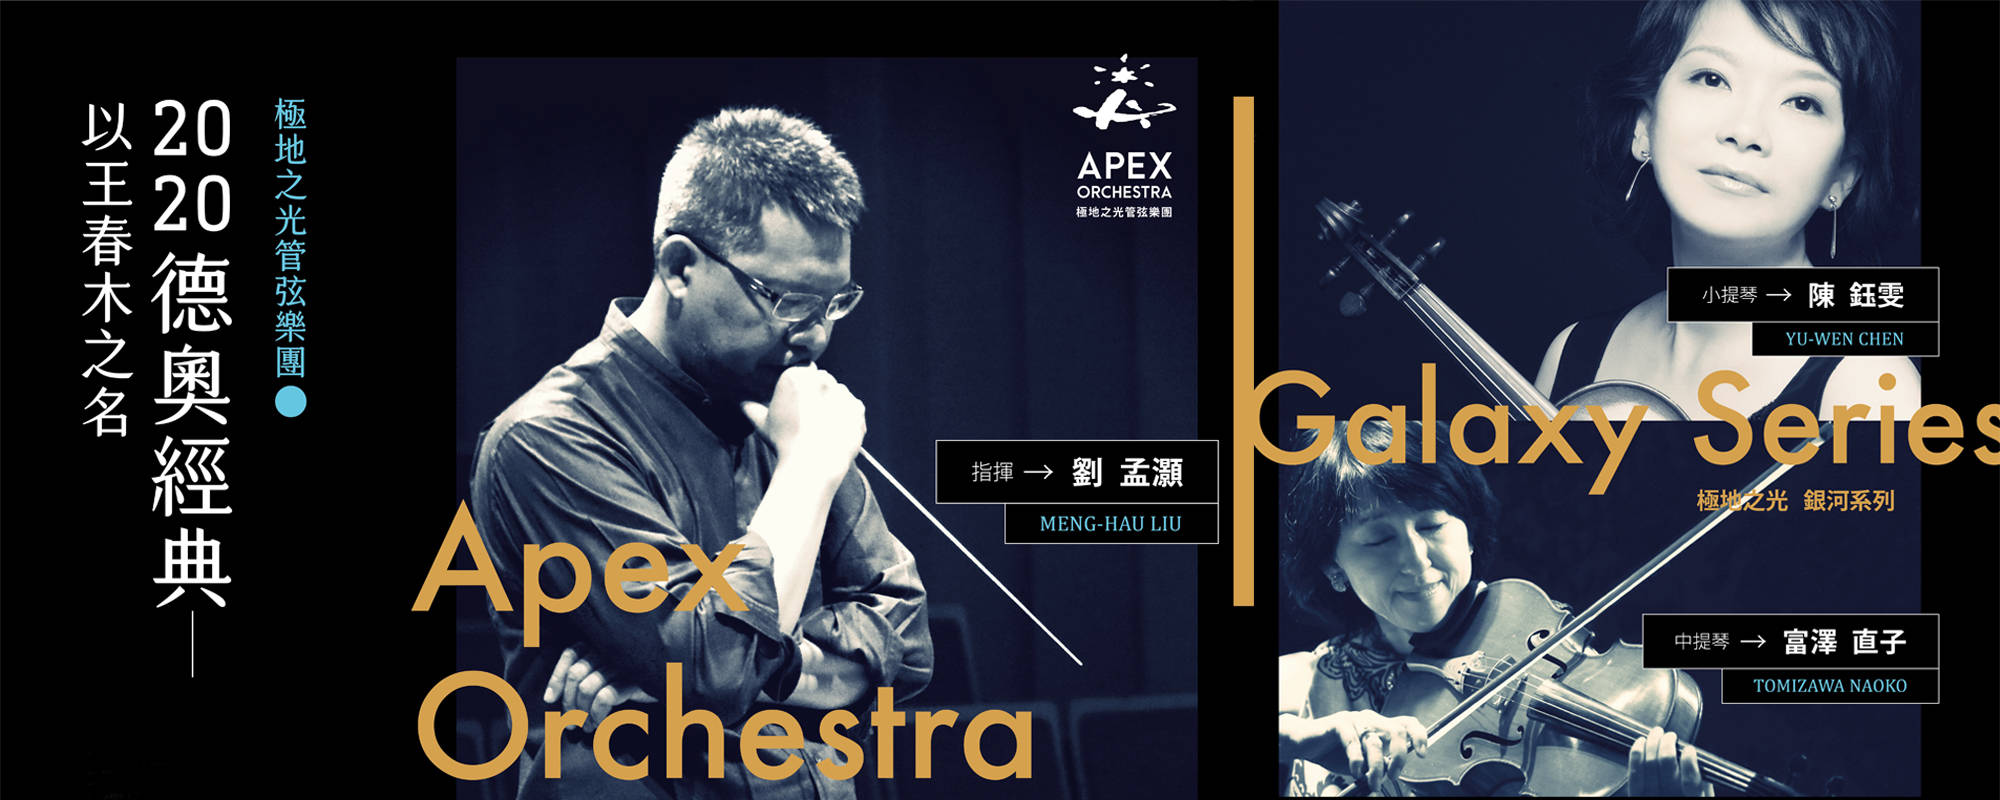 Apex Orchestra 10th Anniversary Concert 